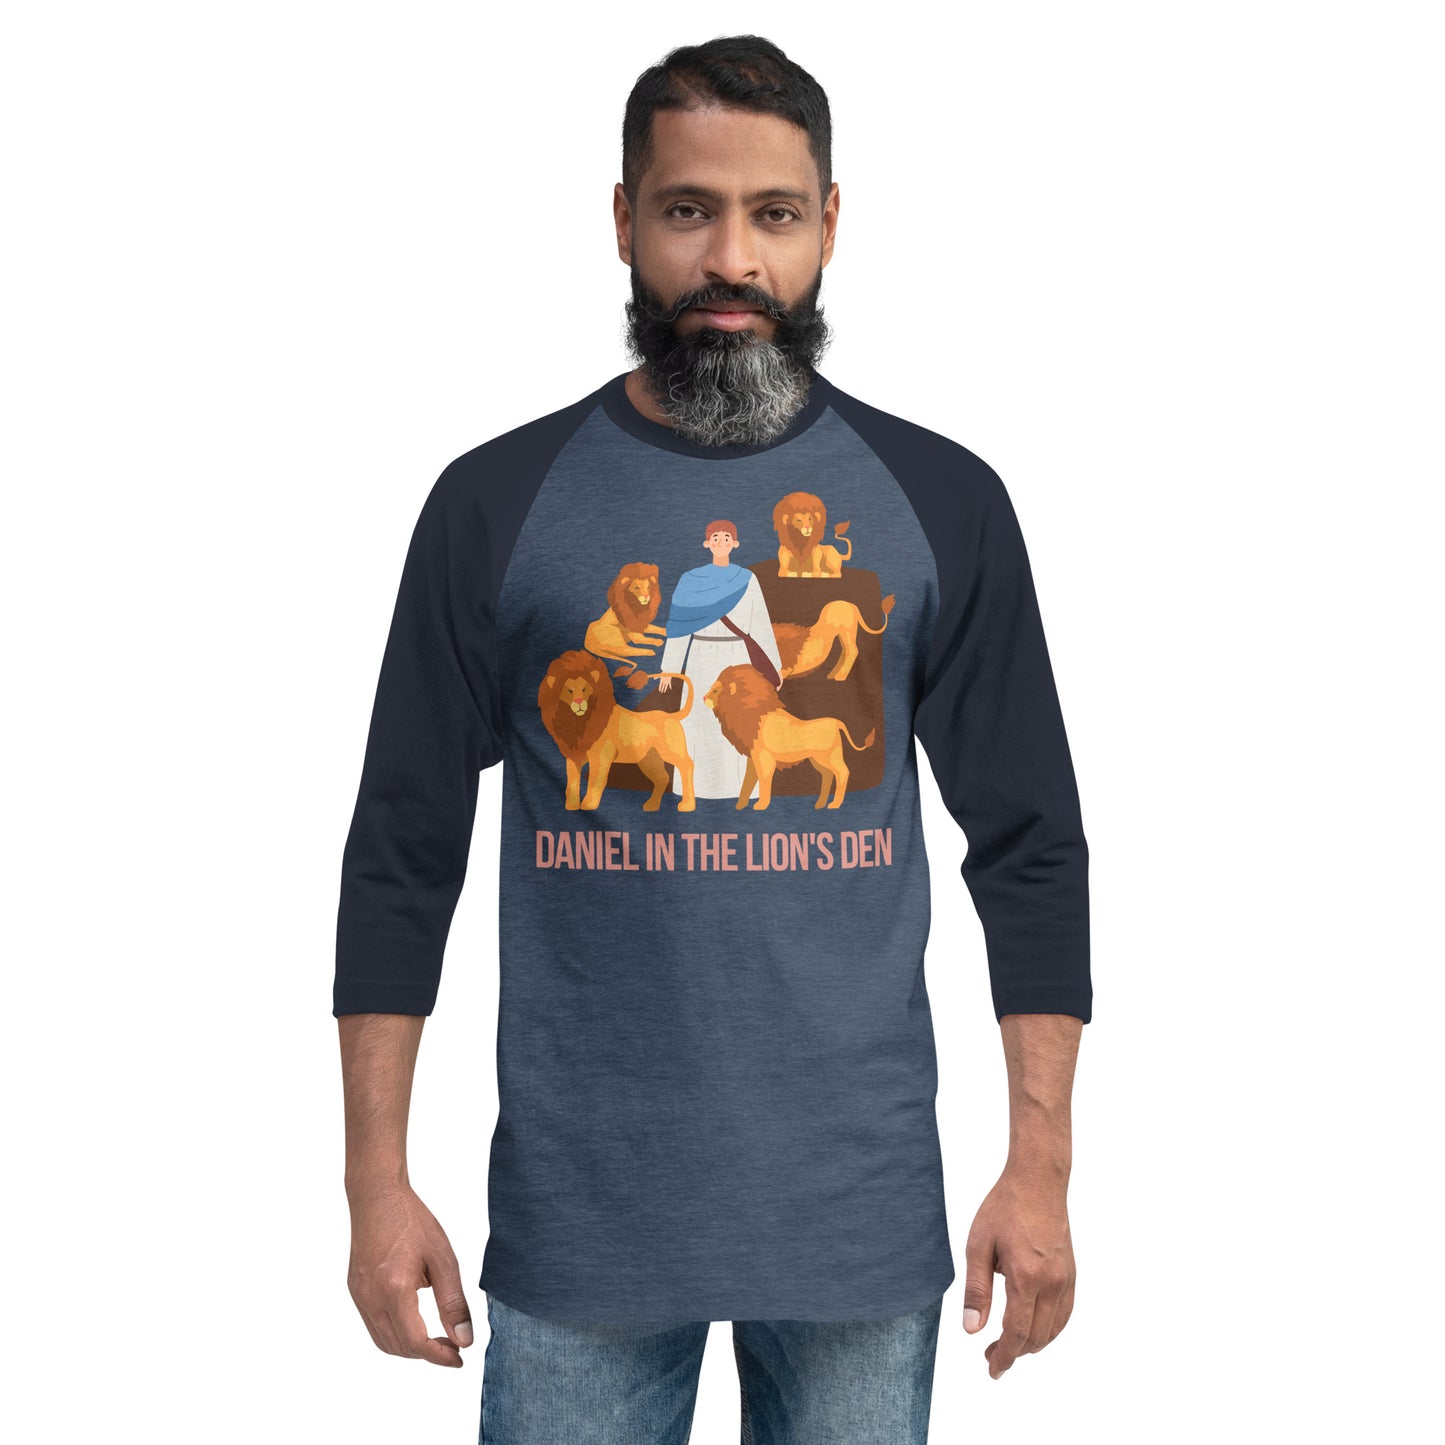 Daniel in the Lion's Den Men's 3/4 Sleeve Raglan Shirt